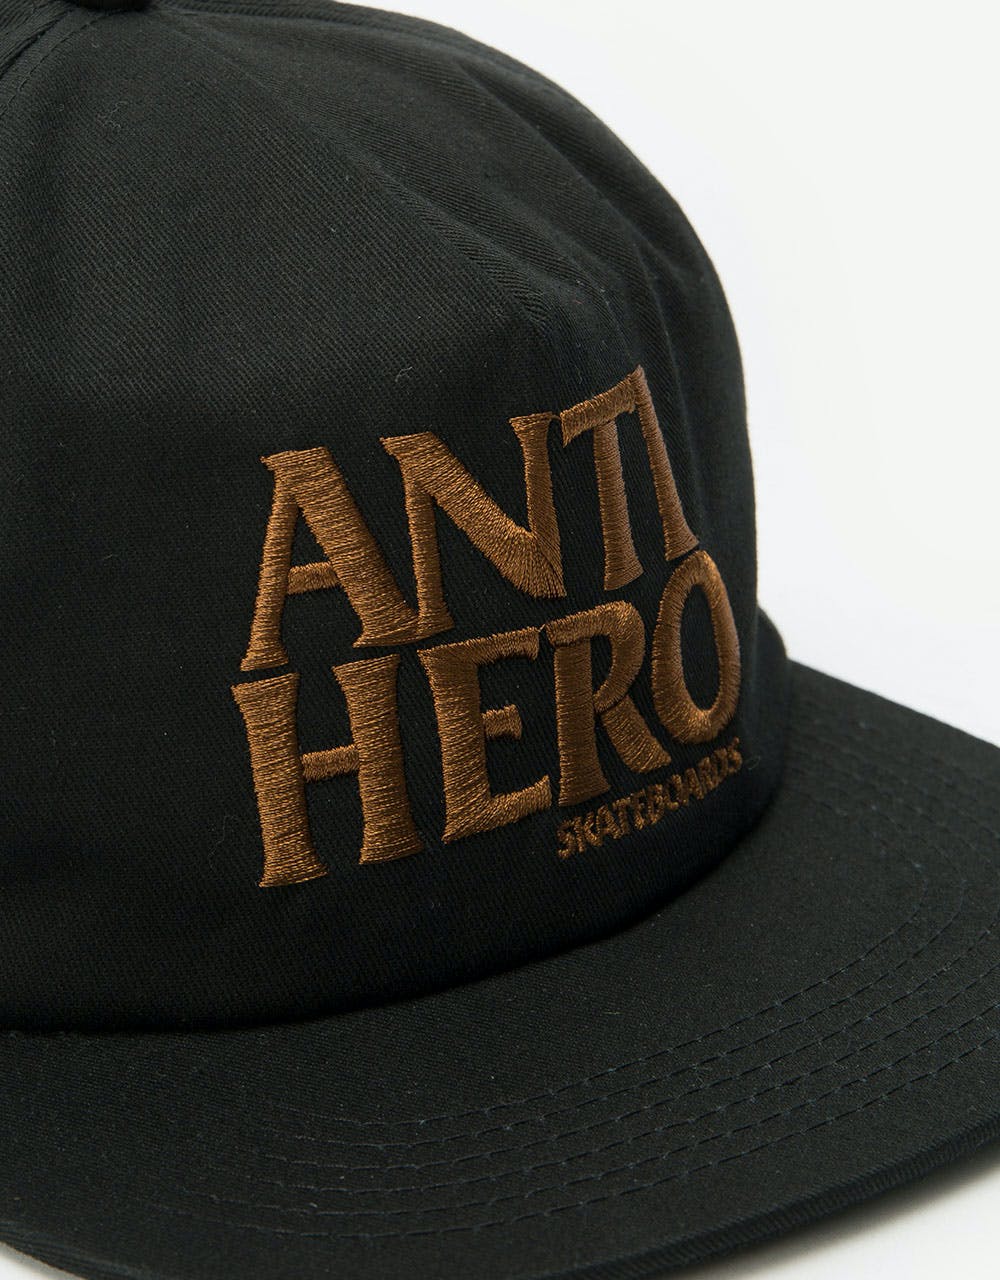 Anti Hero Blackhero Embroidered Snapback Cap - Black/Brown